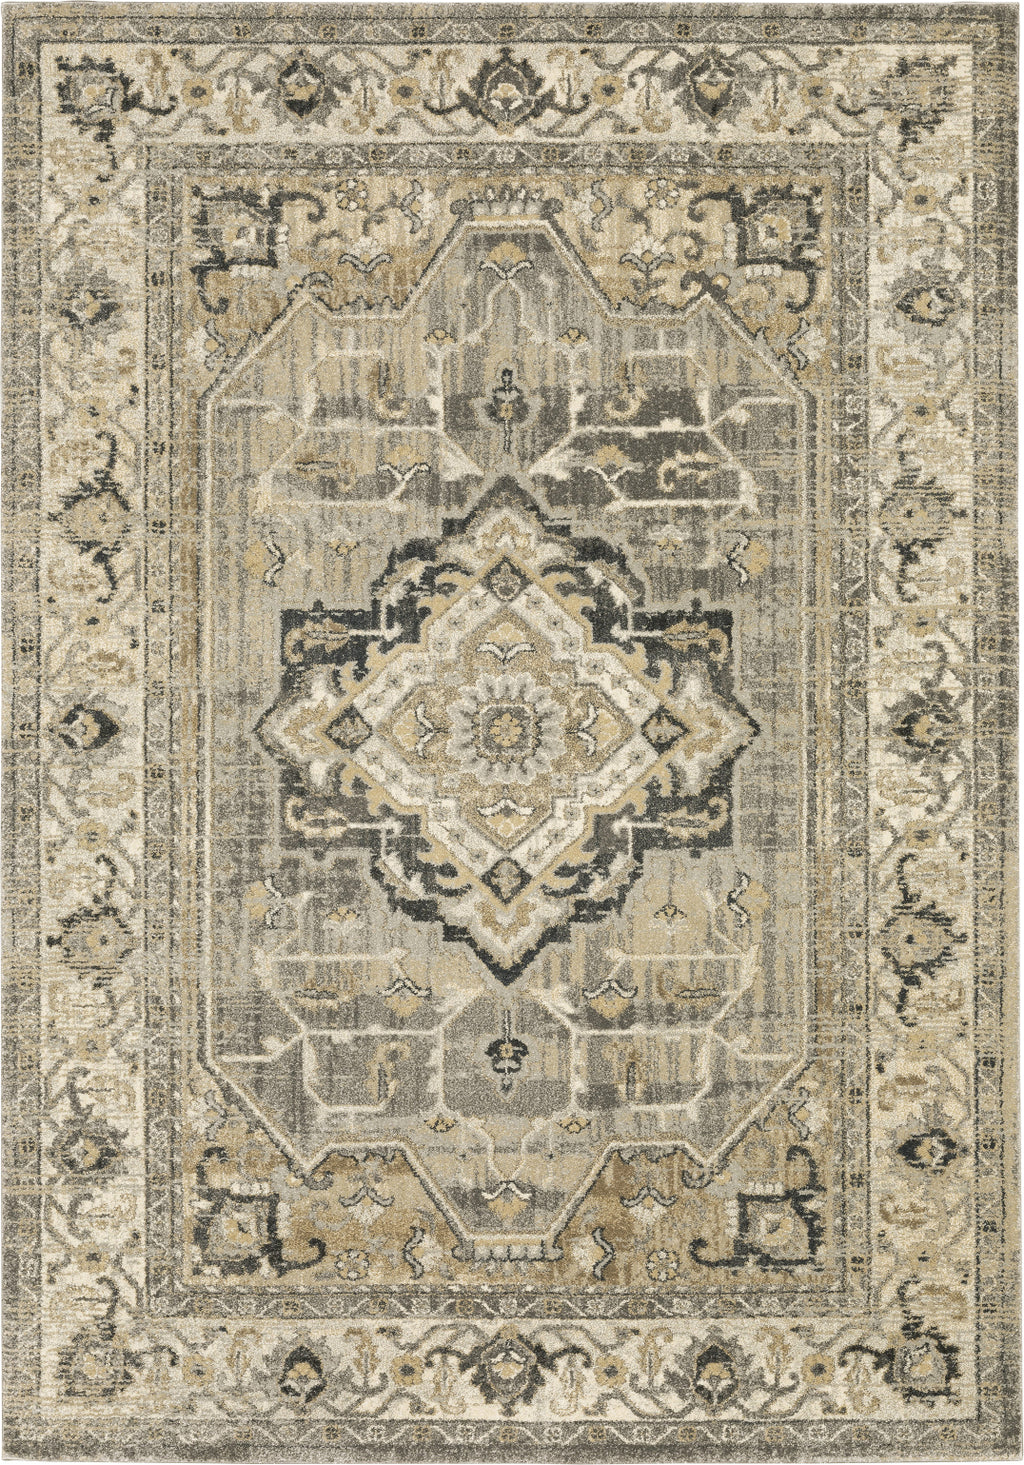 Oriental Weavers Florence 1805X Beige/ Grey Area Rug Main Image